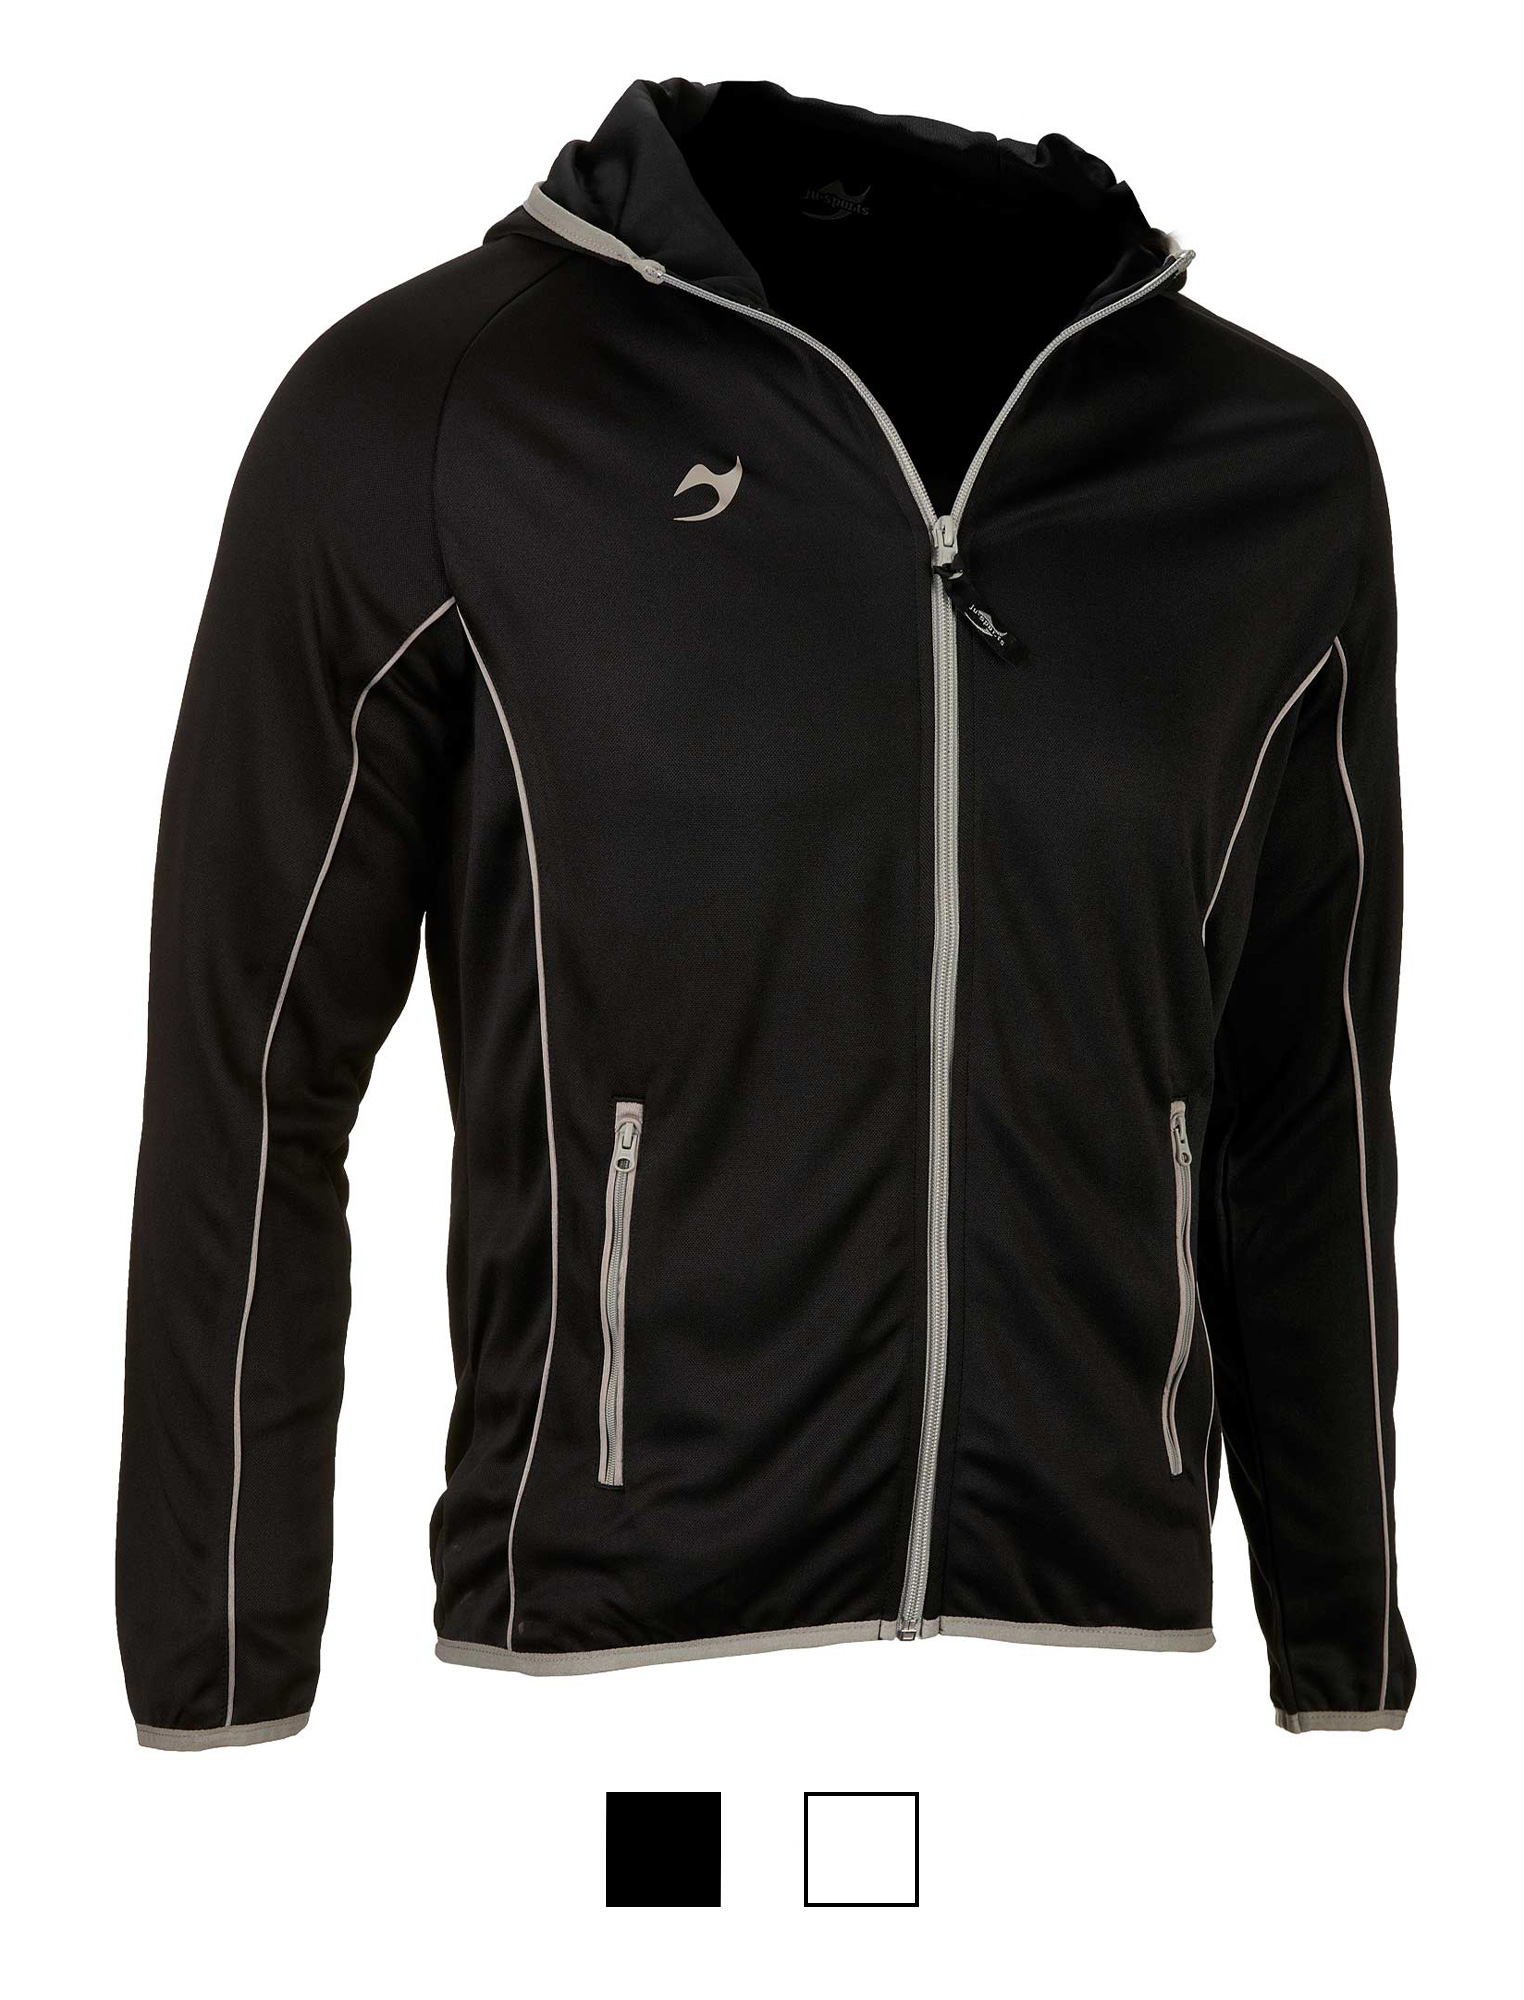 Ju-Sports C3 hooded team jacket black